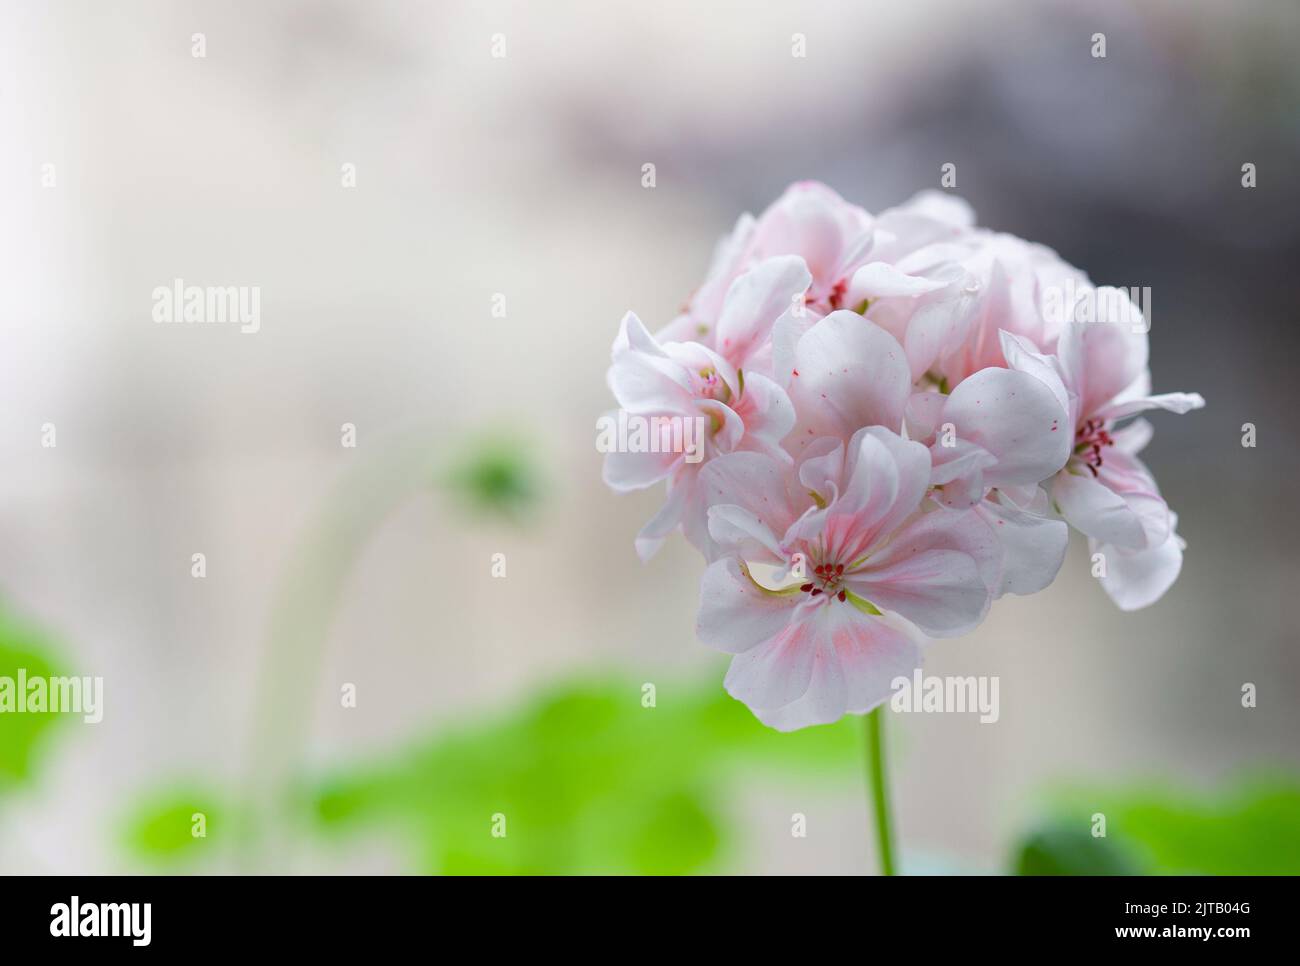 Flowers geraniums varietal or pelargonium. Garden or house plant. Selective focus. Stock Photo